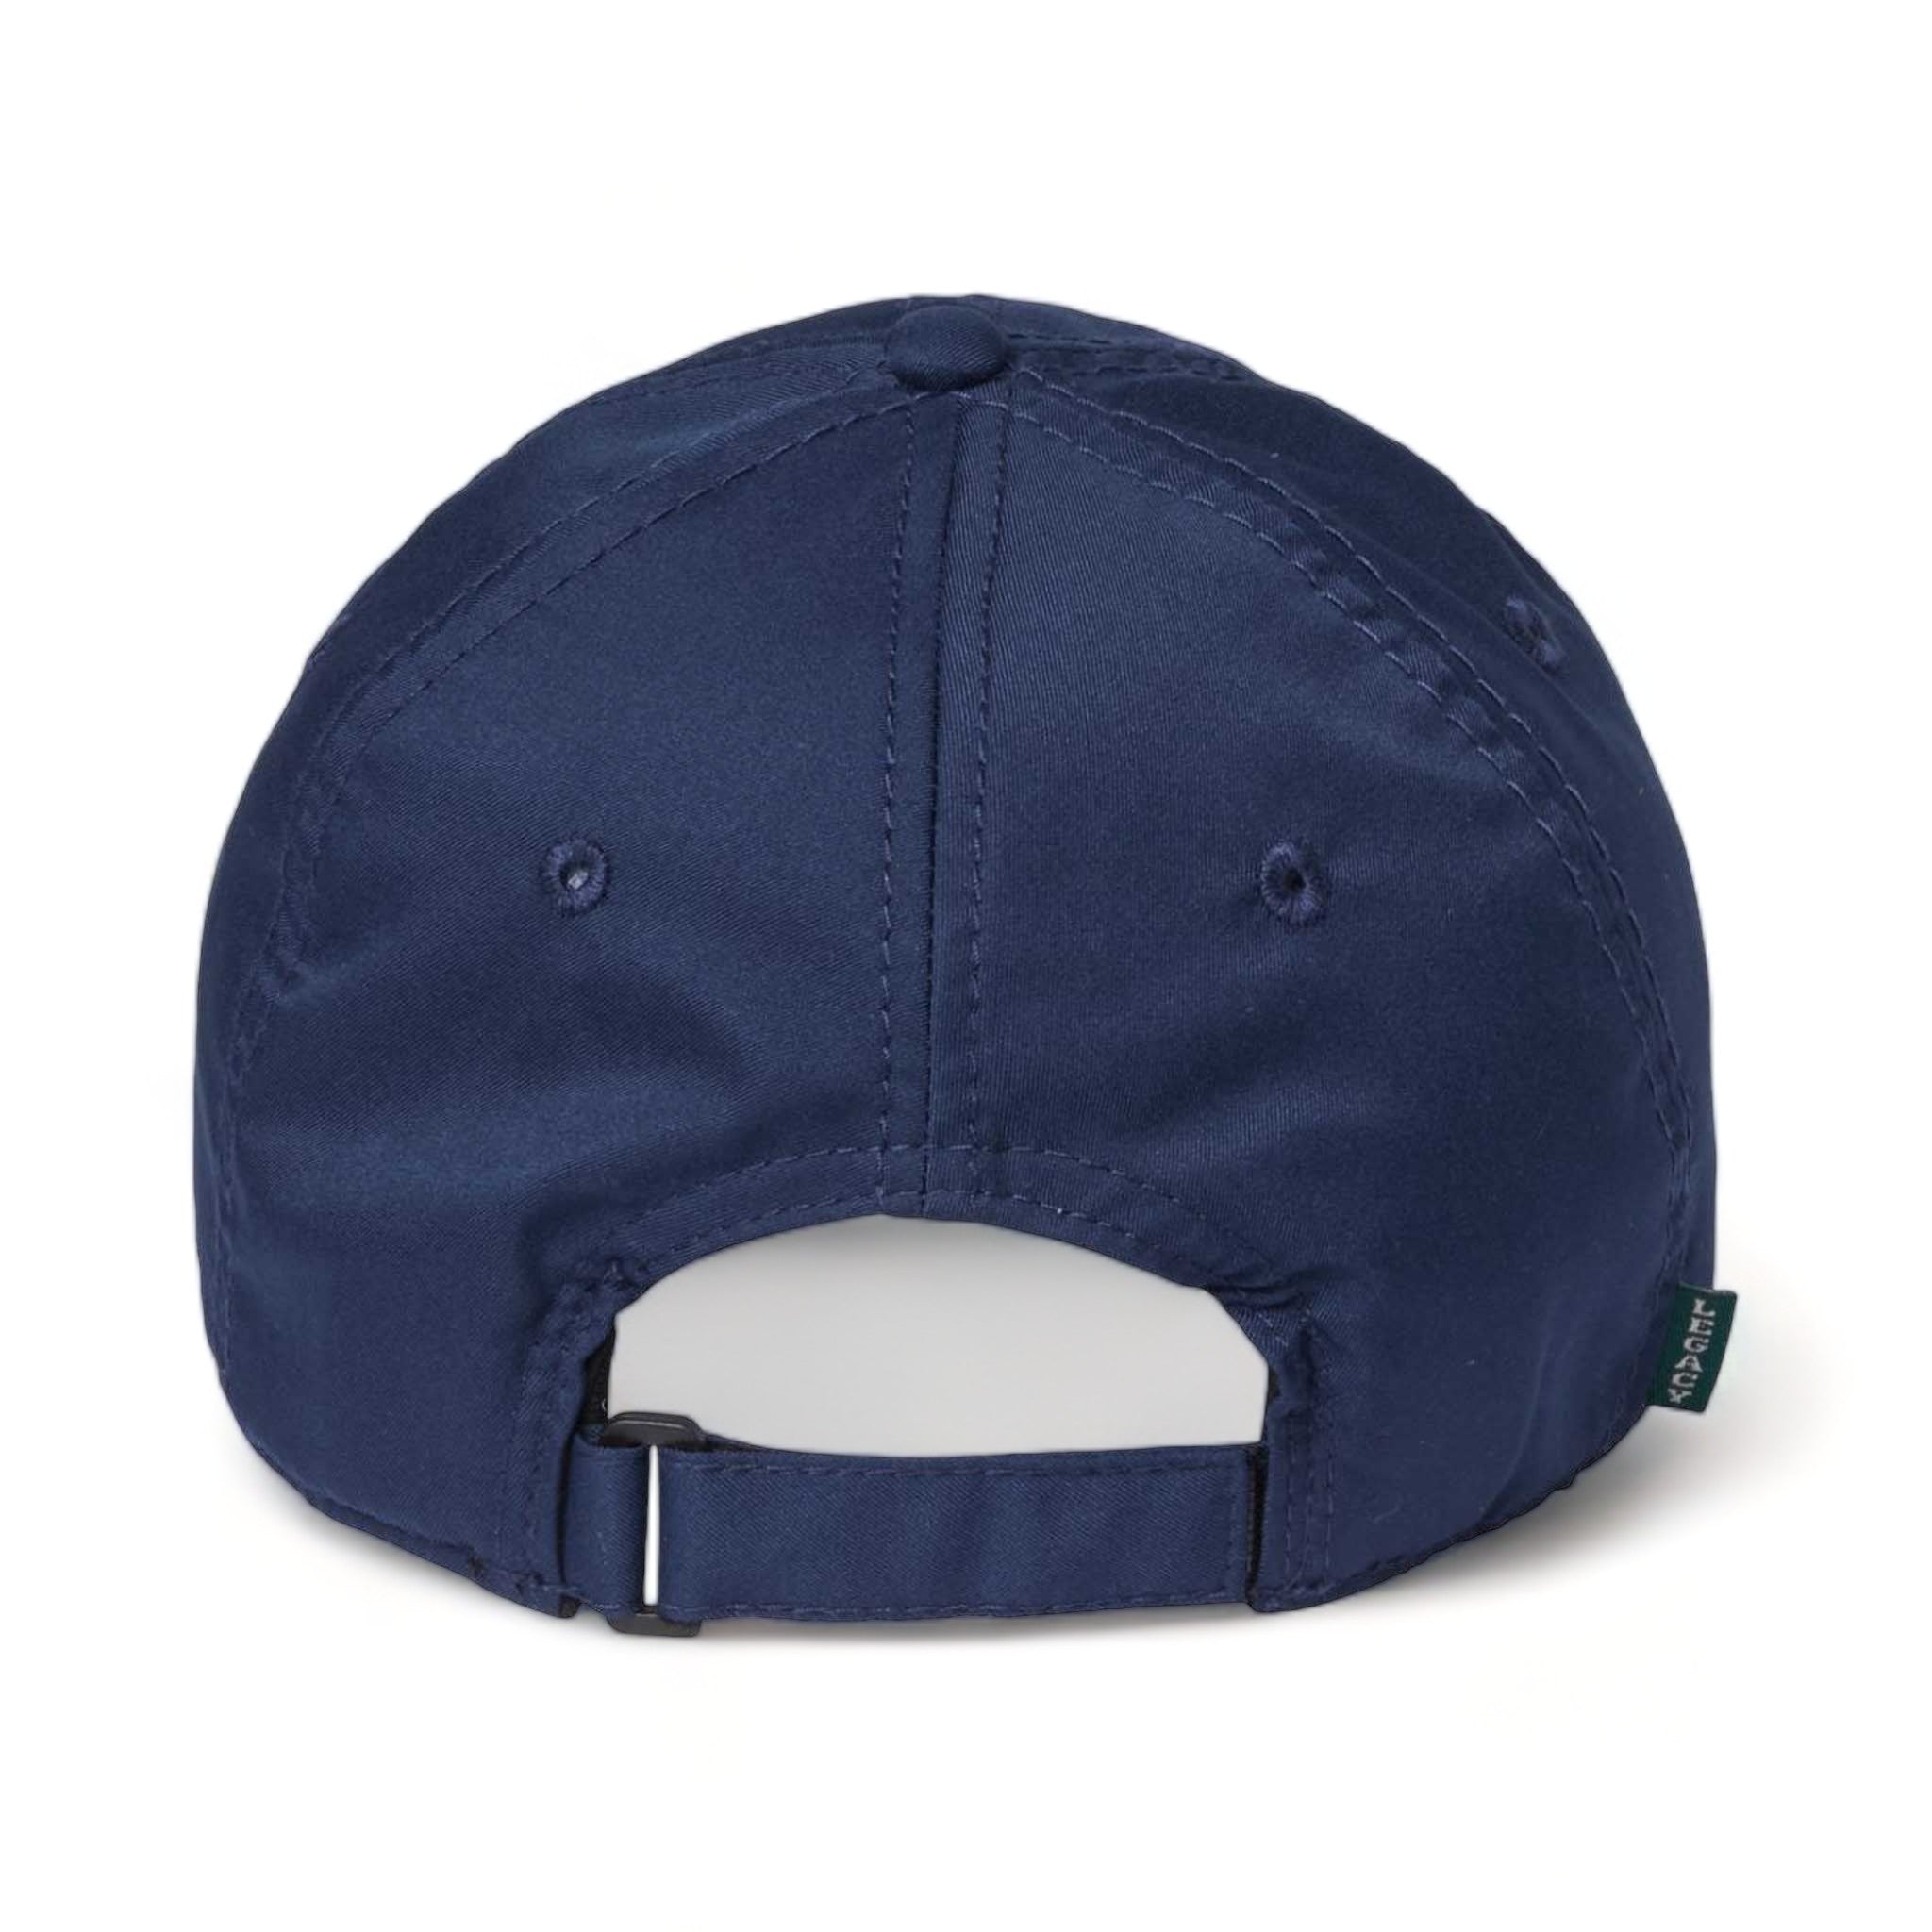 Back view of LEGACY CFA custom hat in navy